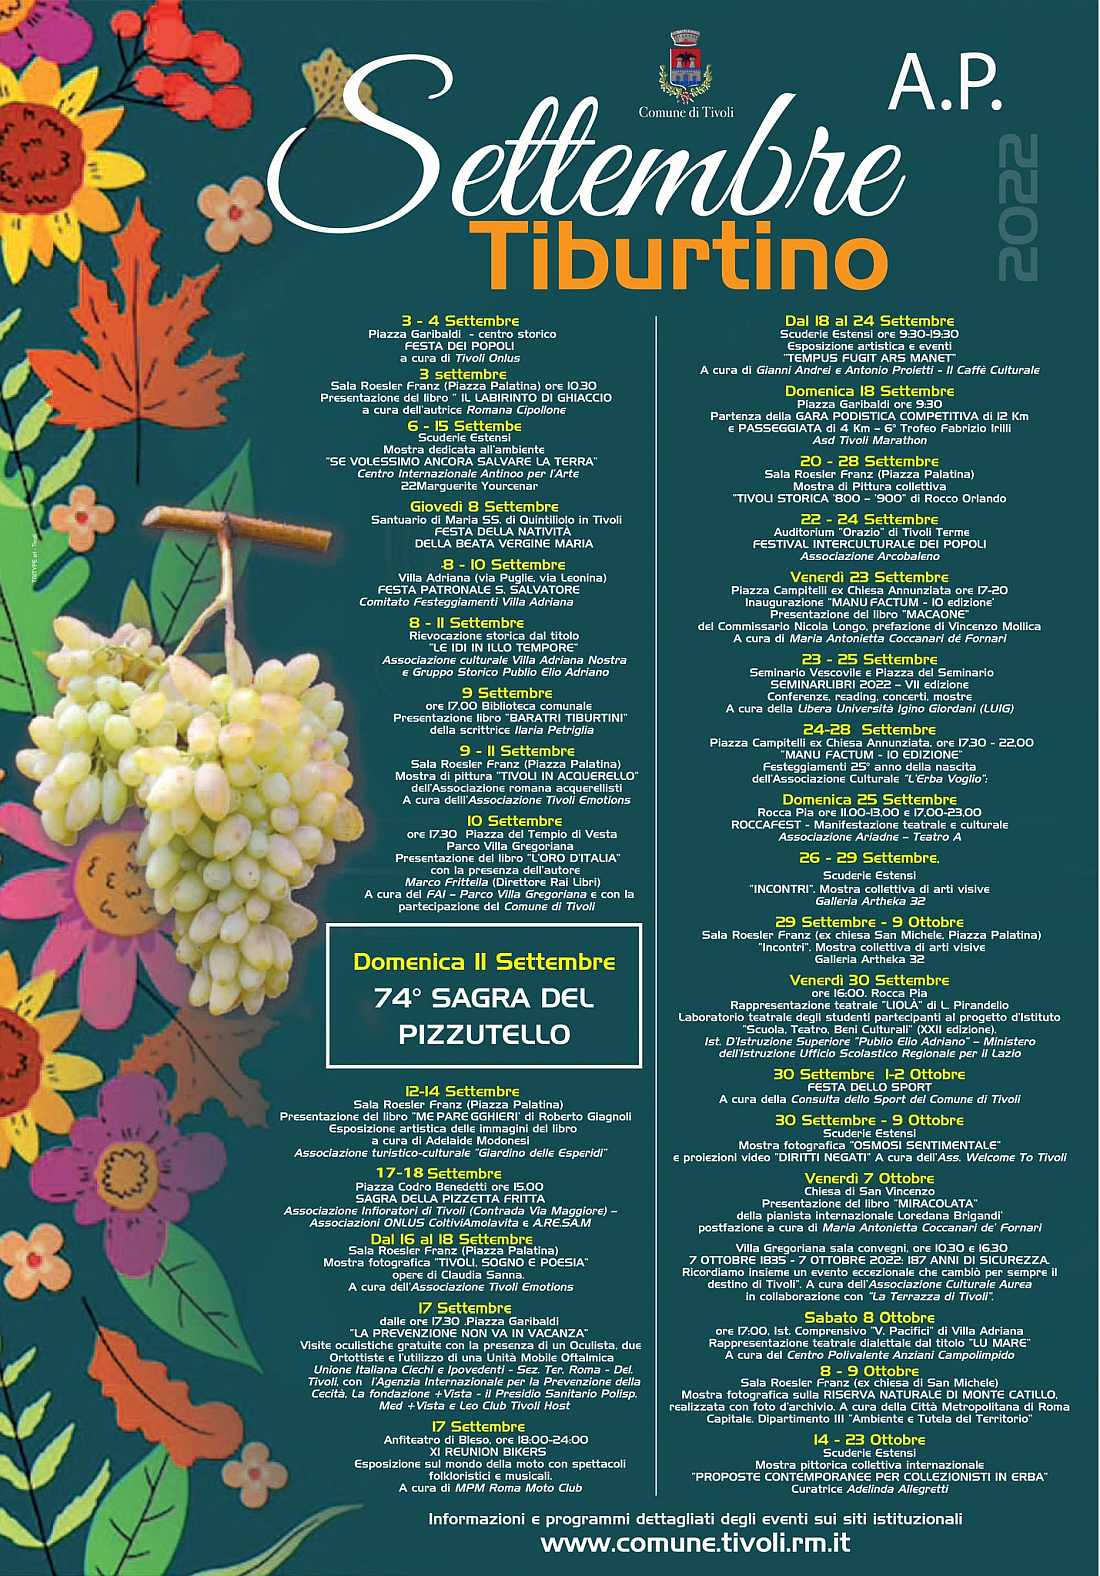 Tivoli (RM)
"Settembre Tiburtino e Sagra del Pizzutello"
